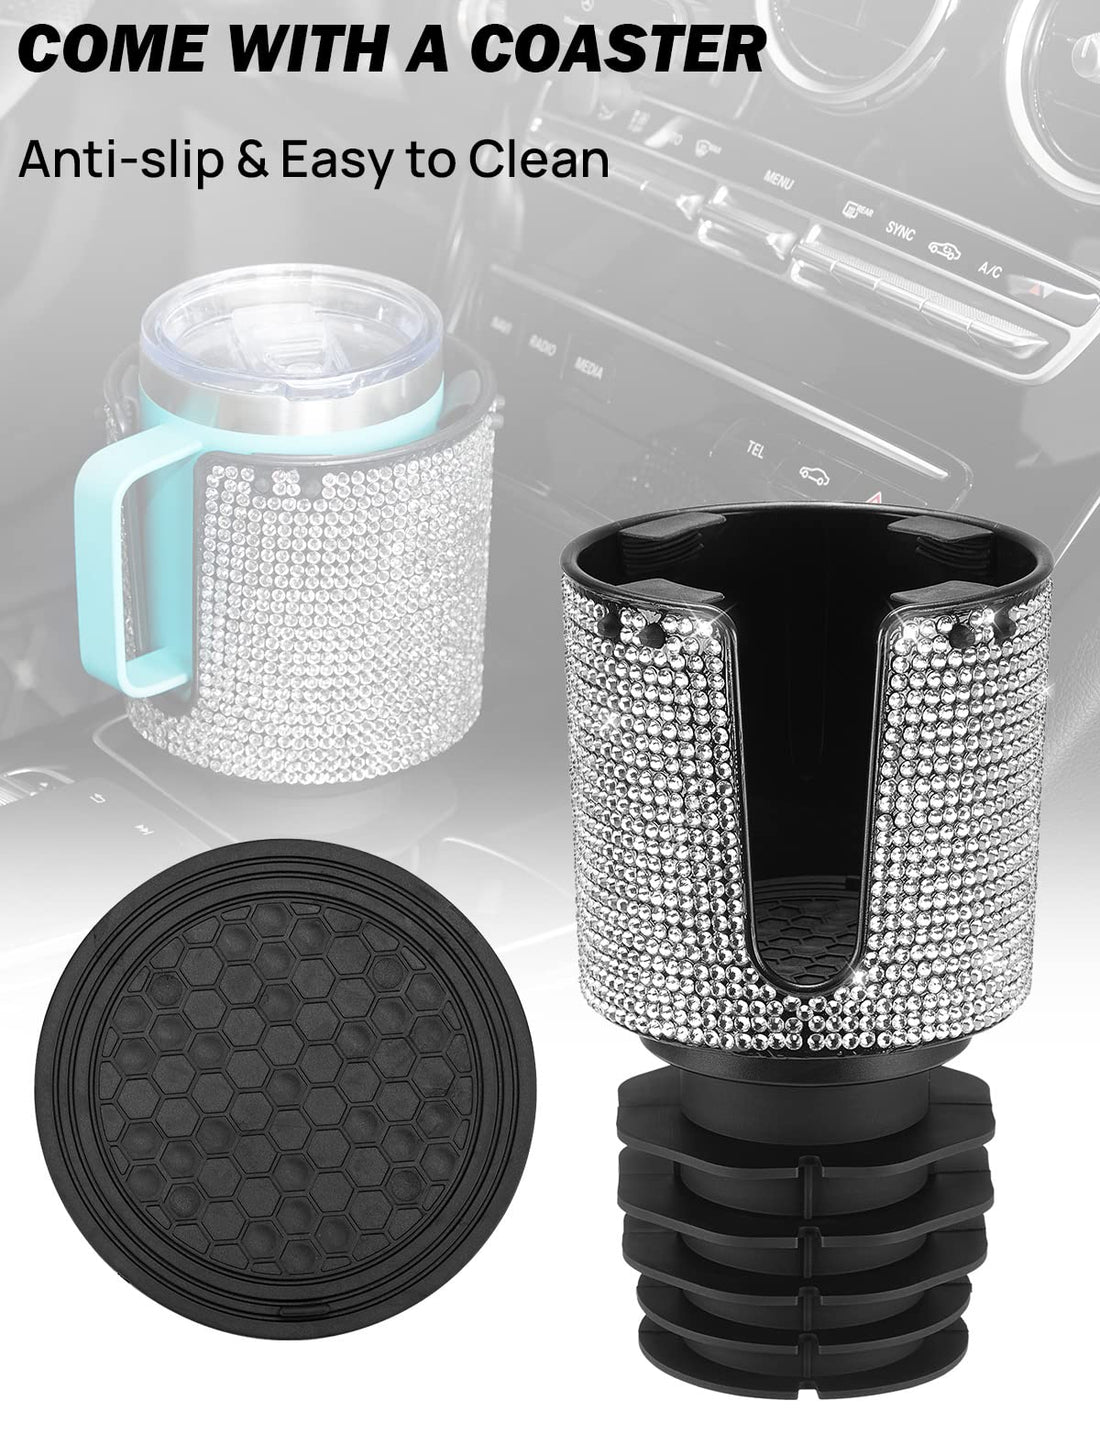 Car Cup Holder Expander for Car Hold 18-40 oz Bottles and Mugs, Other Bottles in 3.4"-3.8"(Bling)